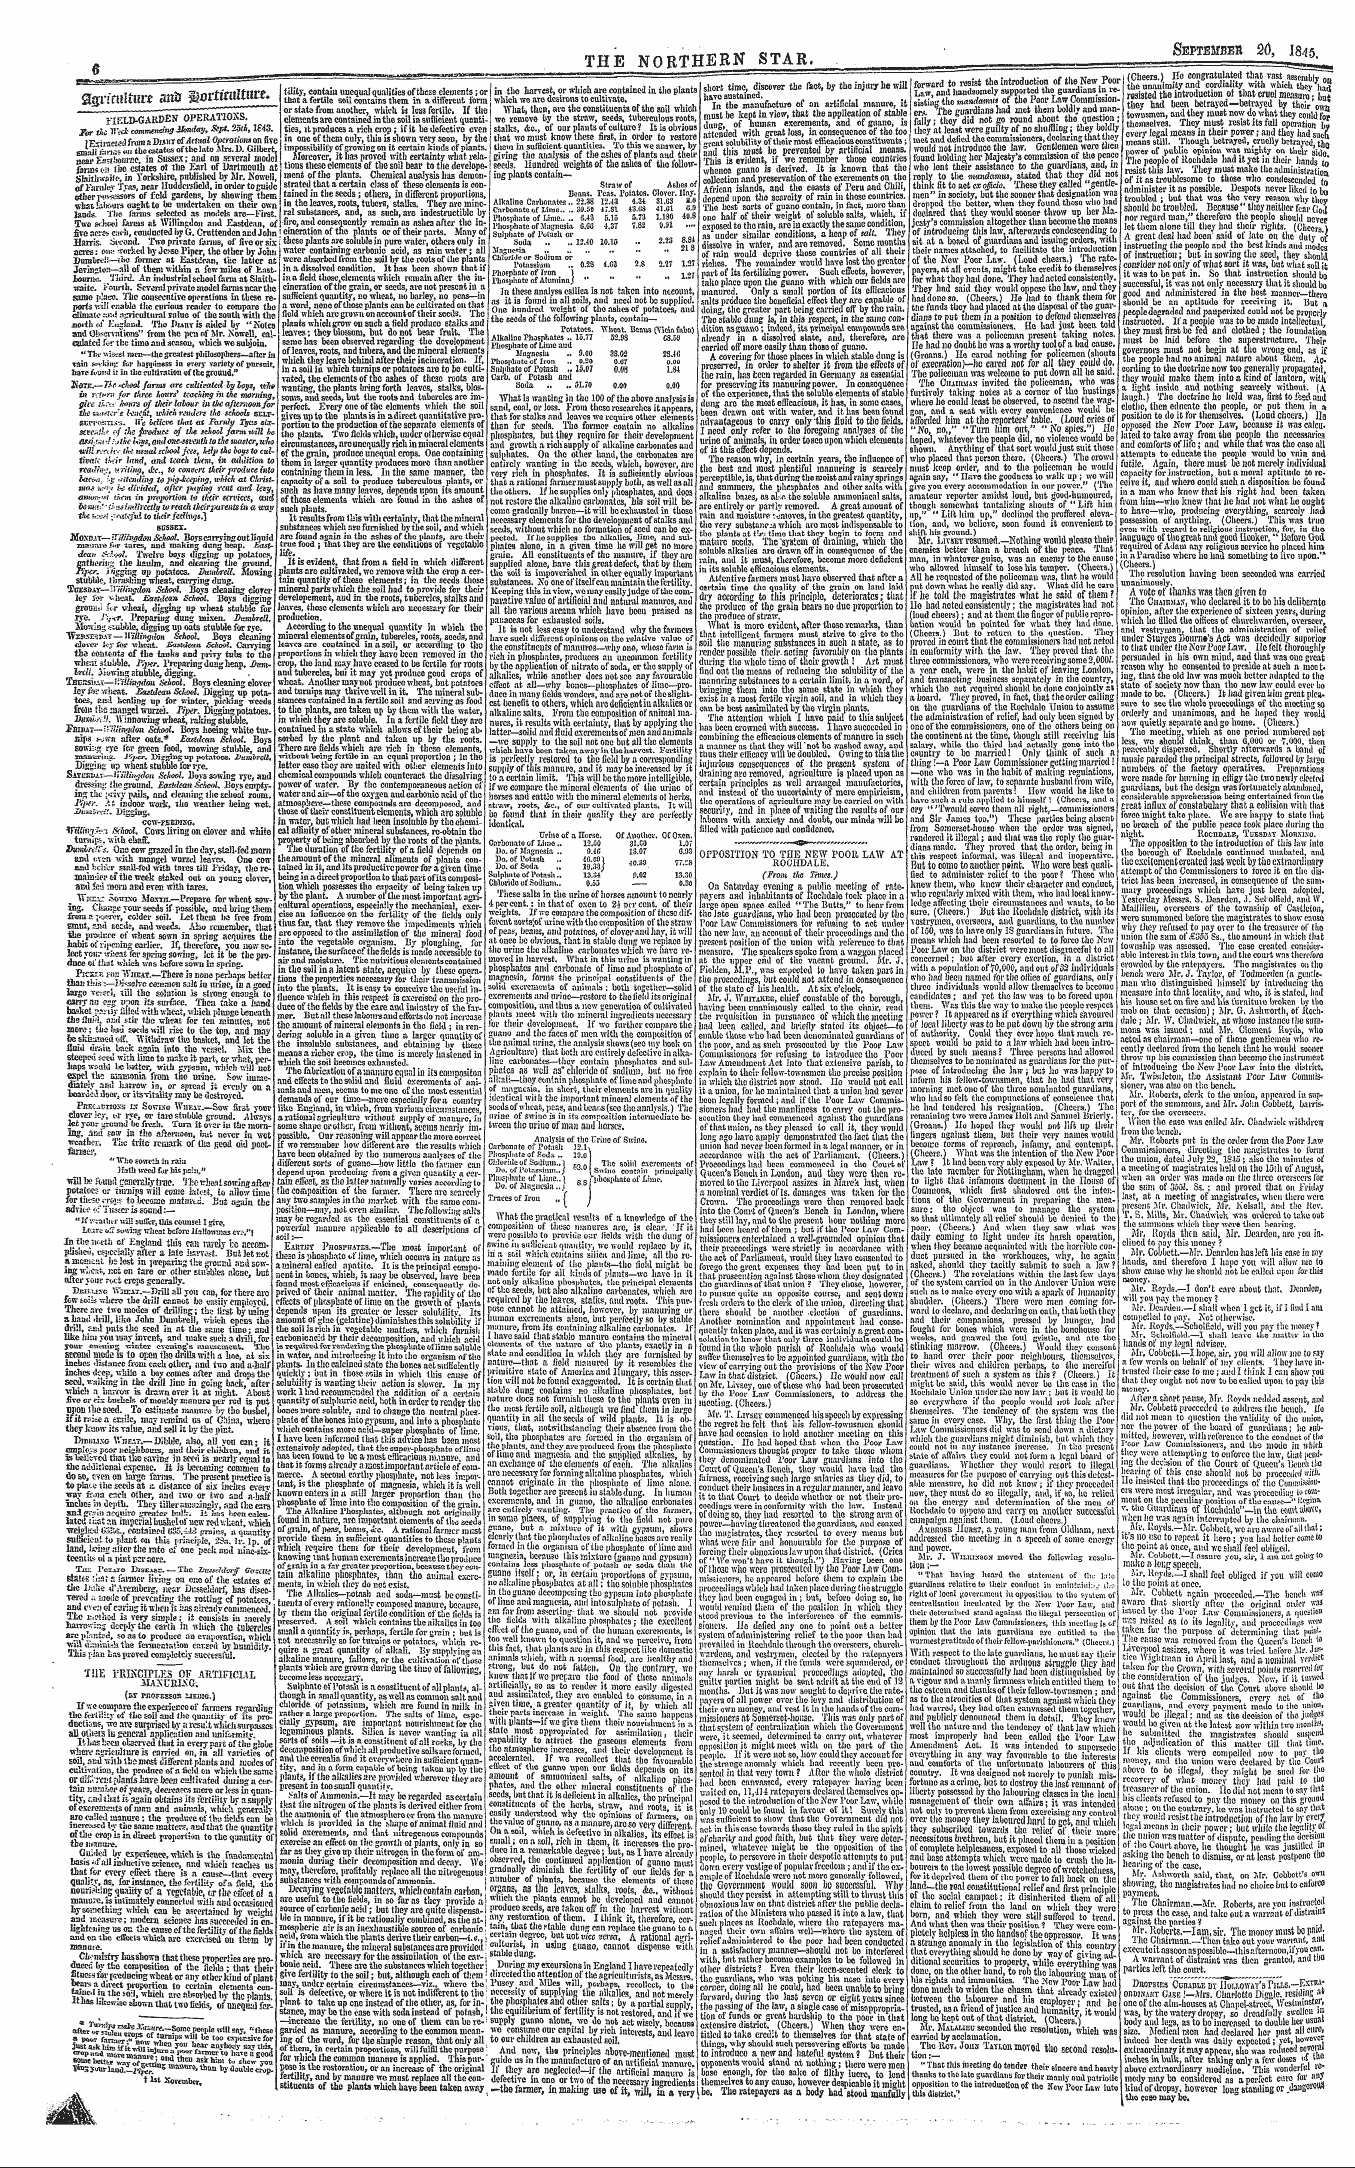 Northern Star (1837-1852): jS F Y, 3rd edition - The Pbukhtles Of Artificial Xaxuhi£&. (B...